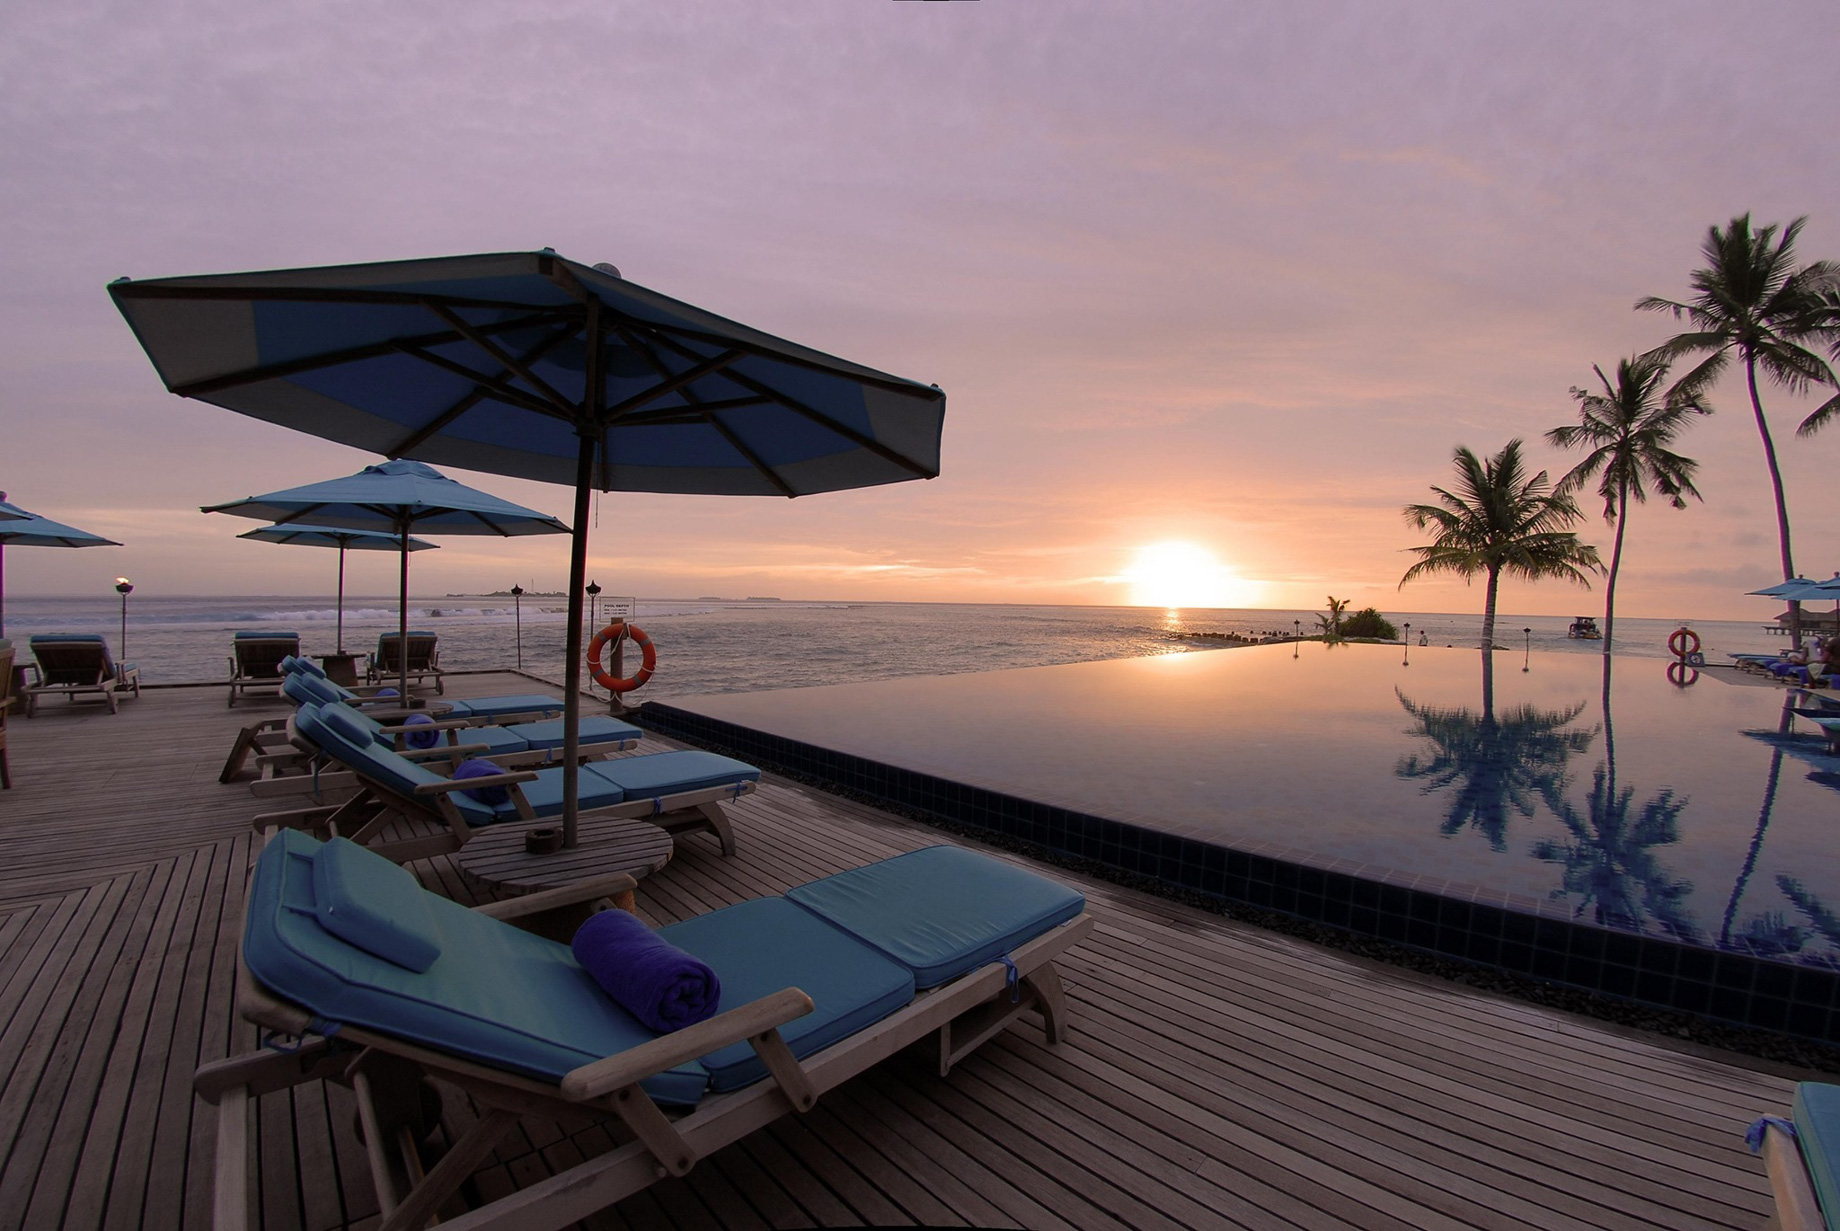 Anantara Veli Maldives Resort – South Male Atoll, Maldives – Infinity Pool Sunset